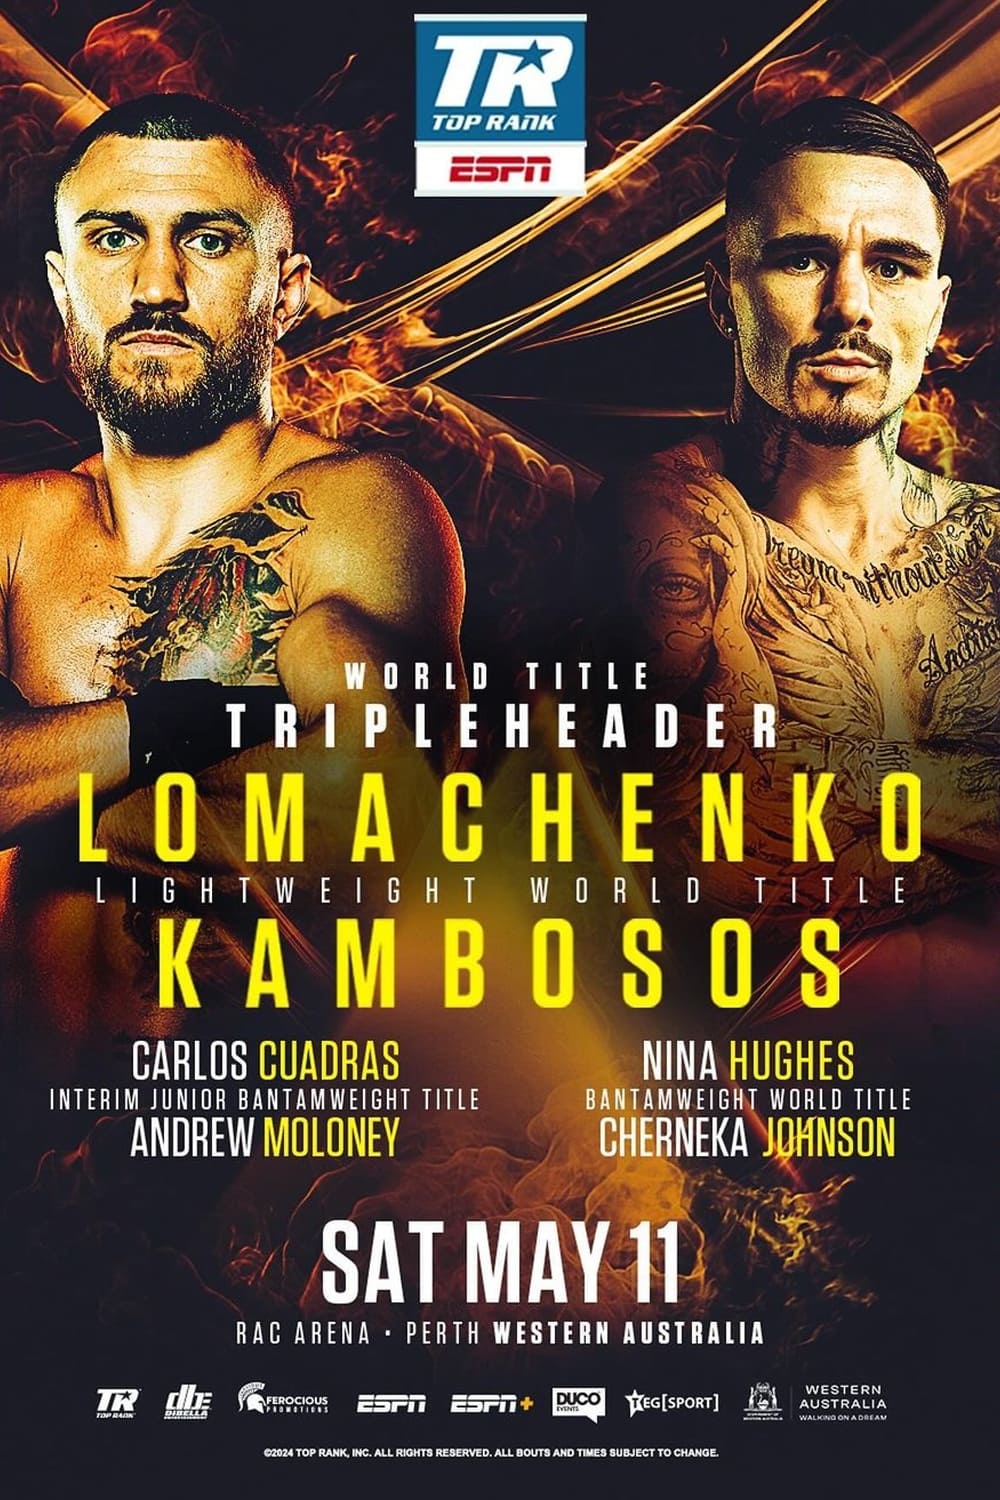 Vasyl Lomachenko vs. George Kambosos Jr.